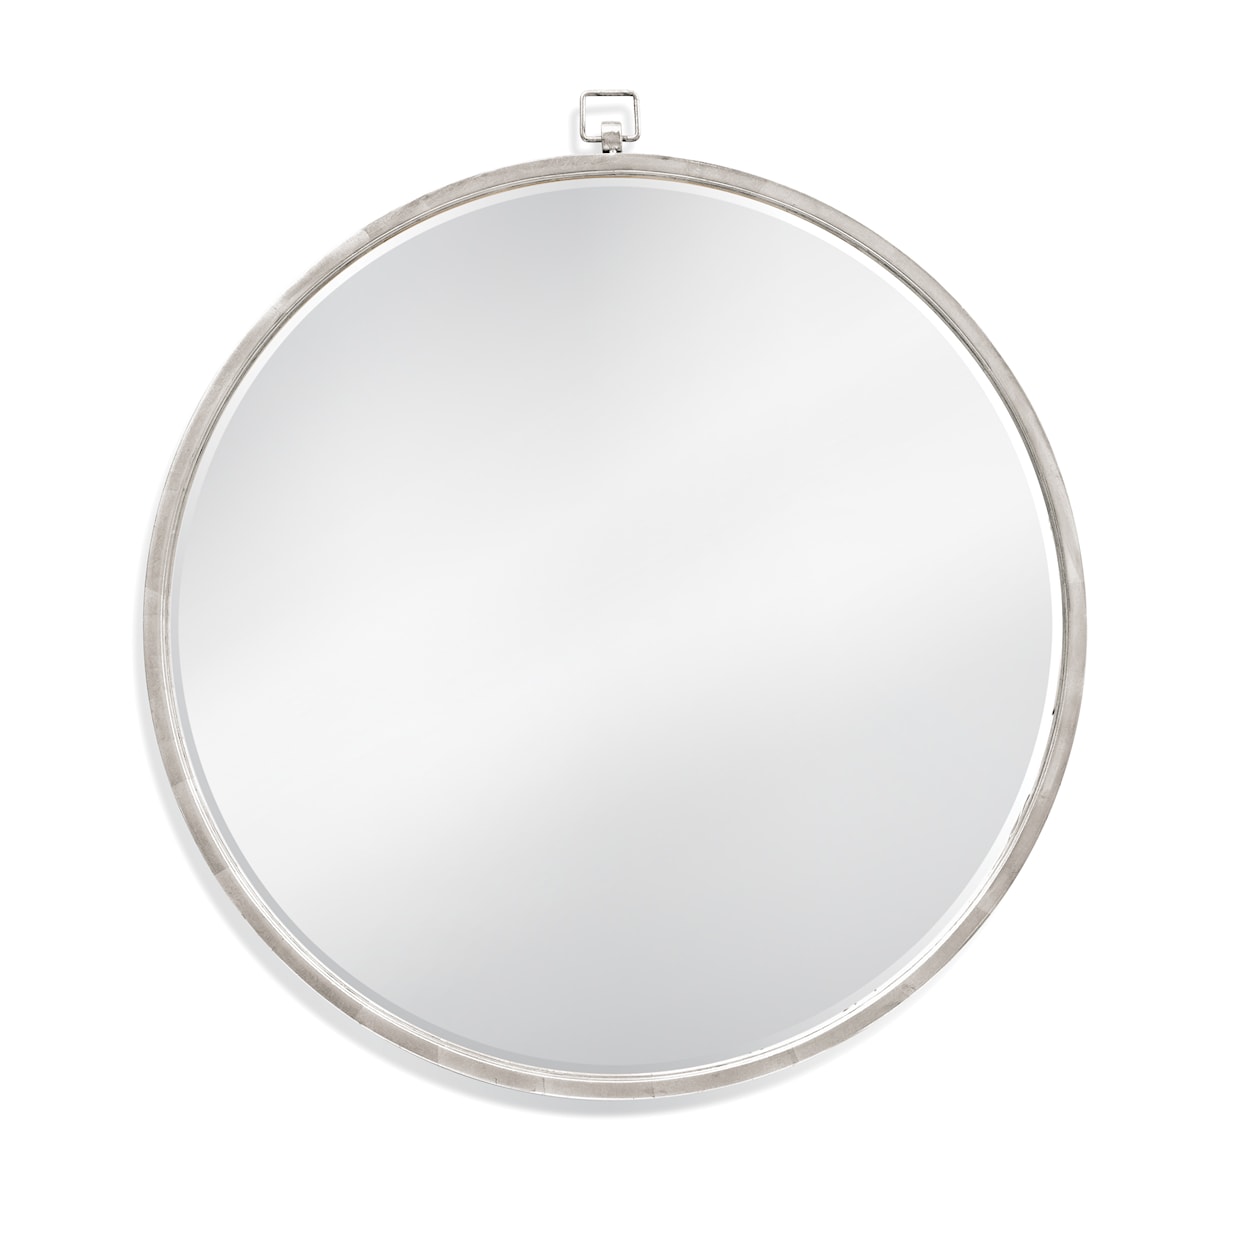 Bassett Mirror Bassett Mirror Bennet Wall Mirror 